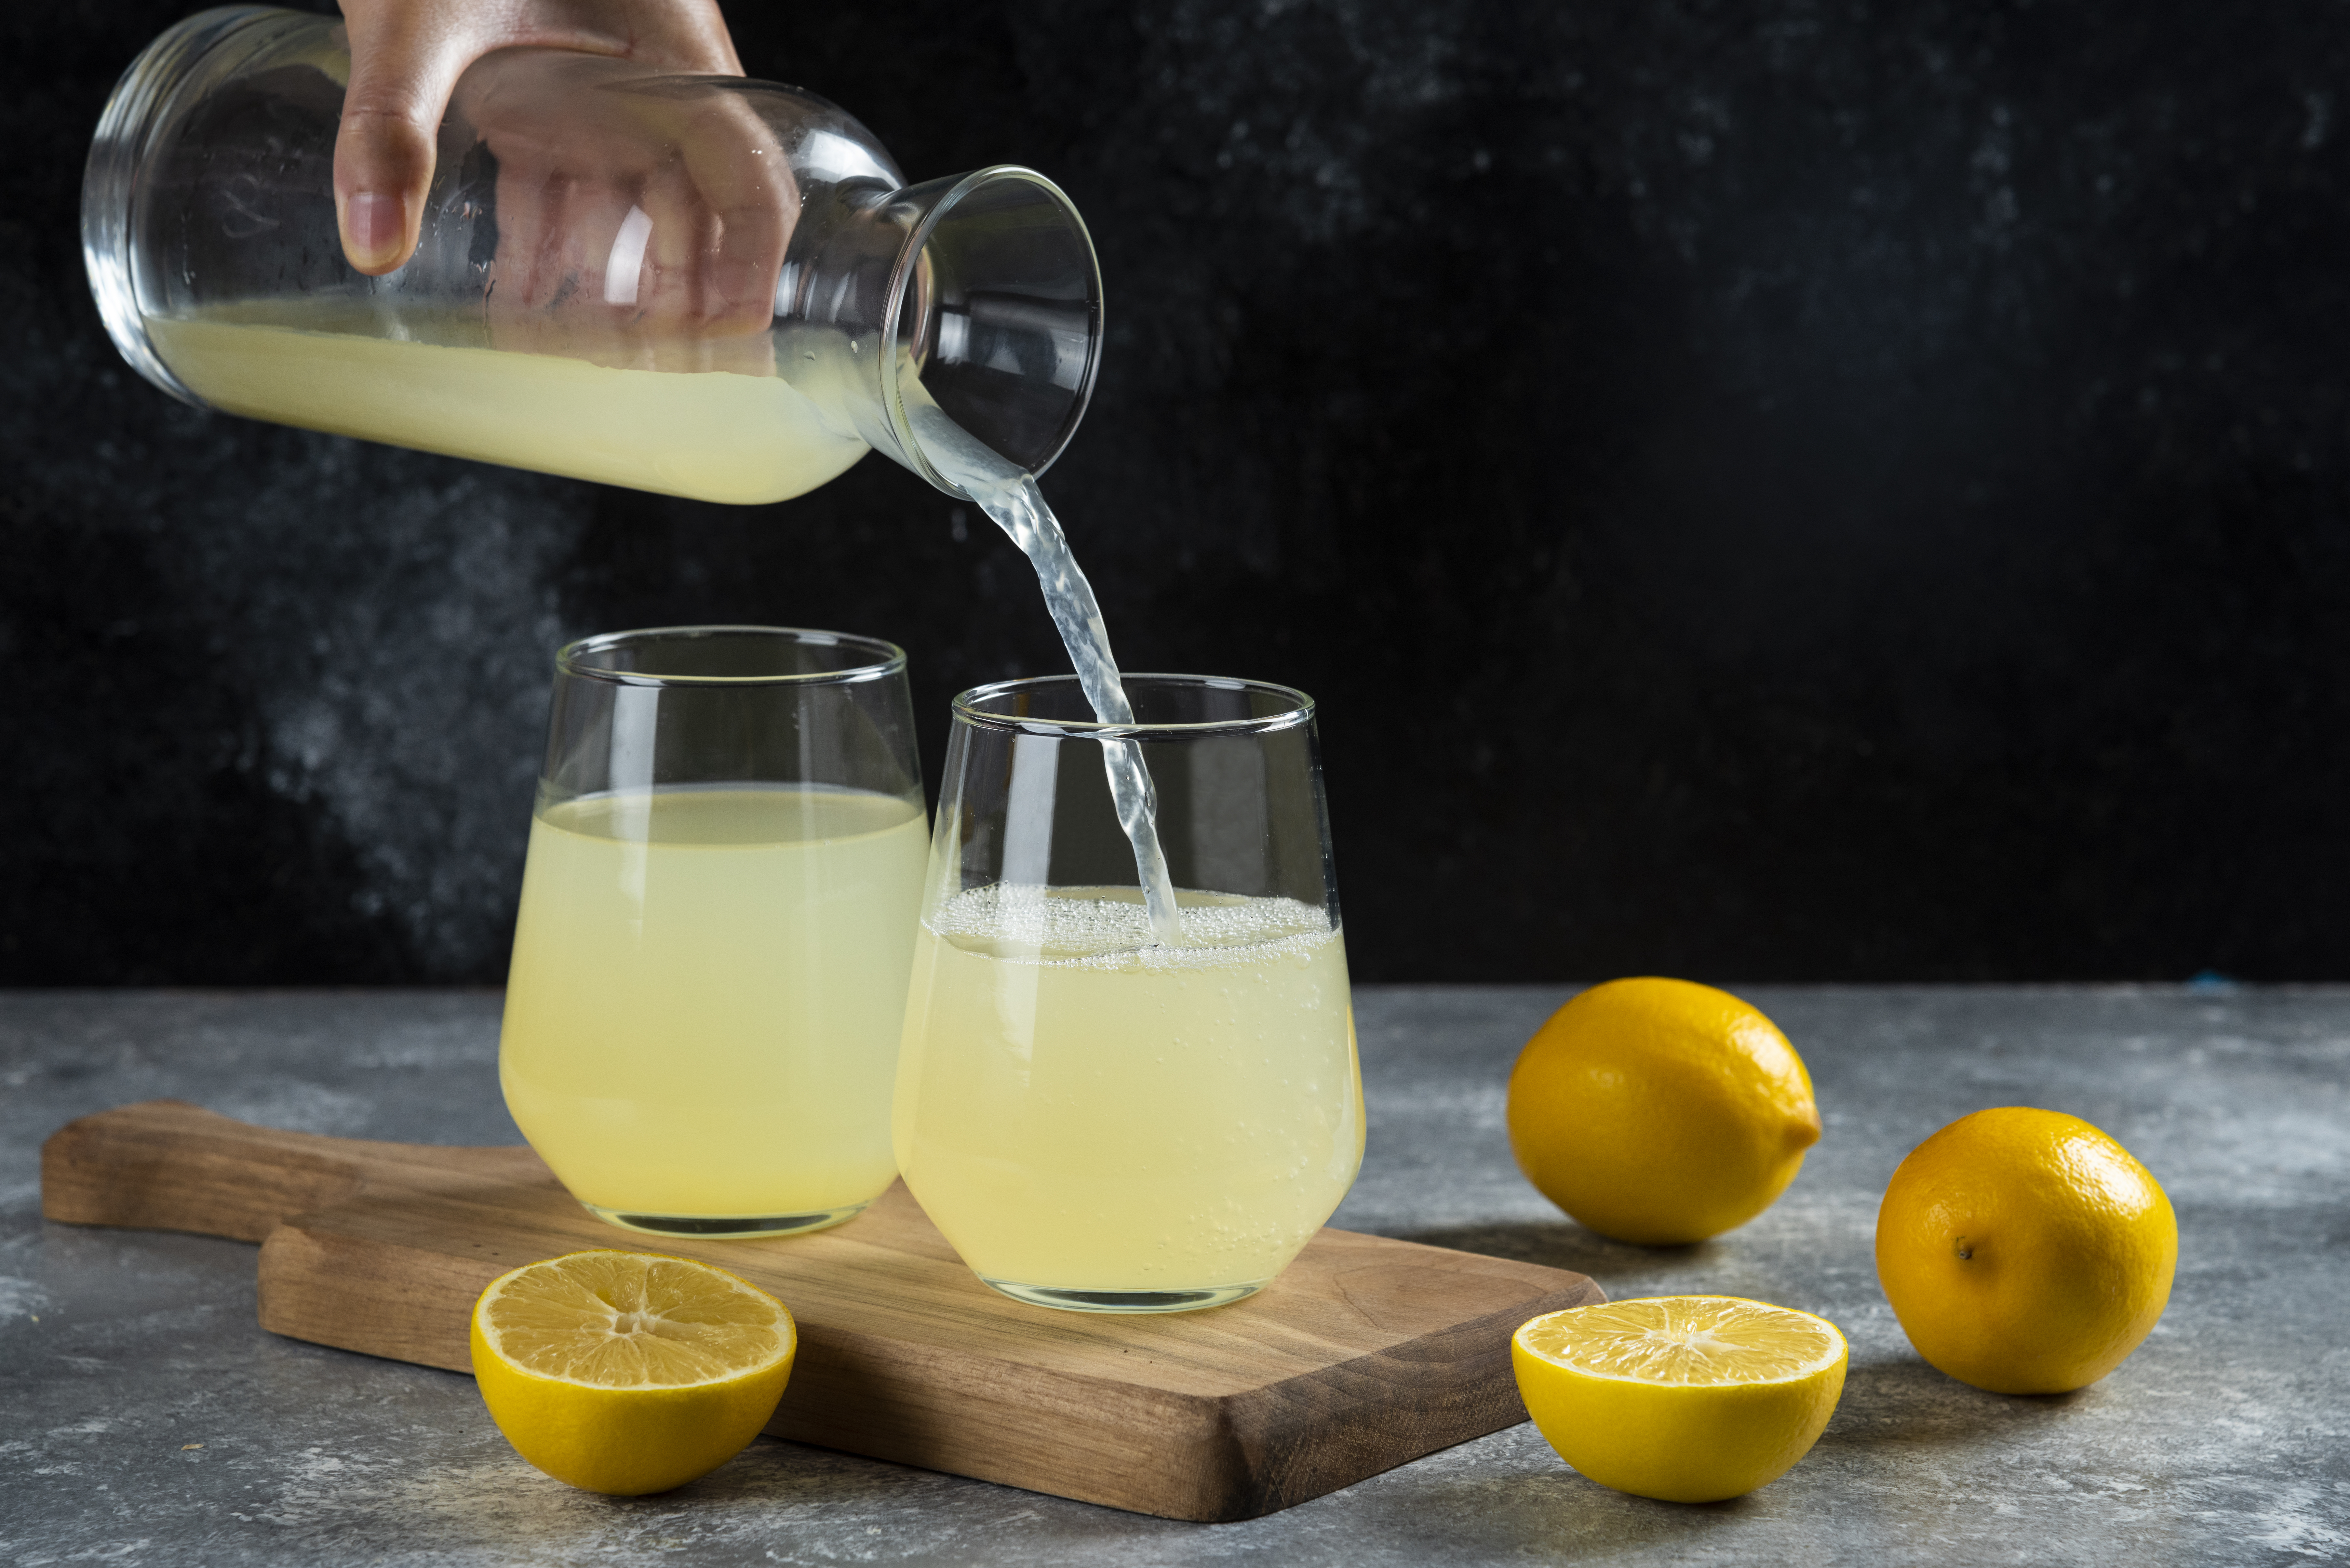 Lemon juice ready to use